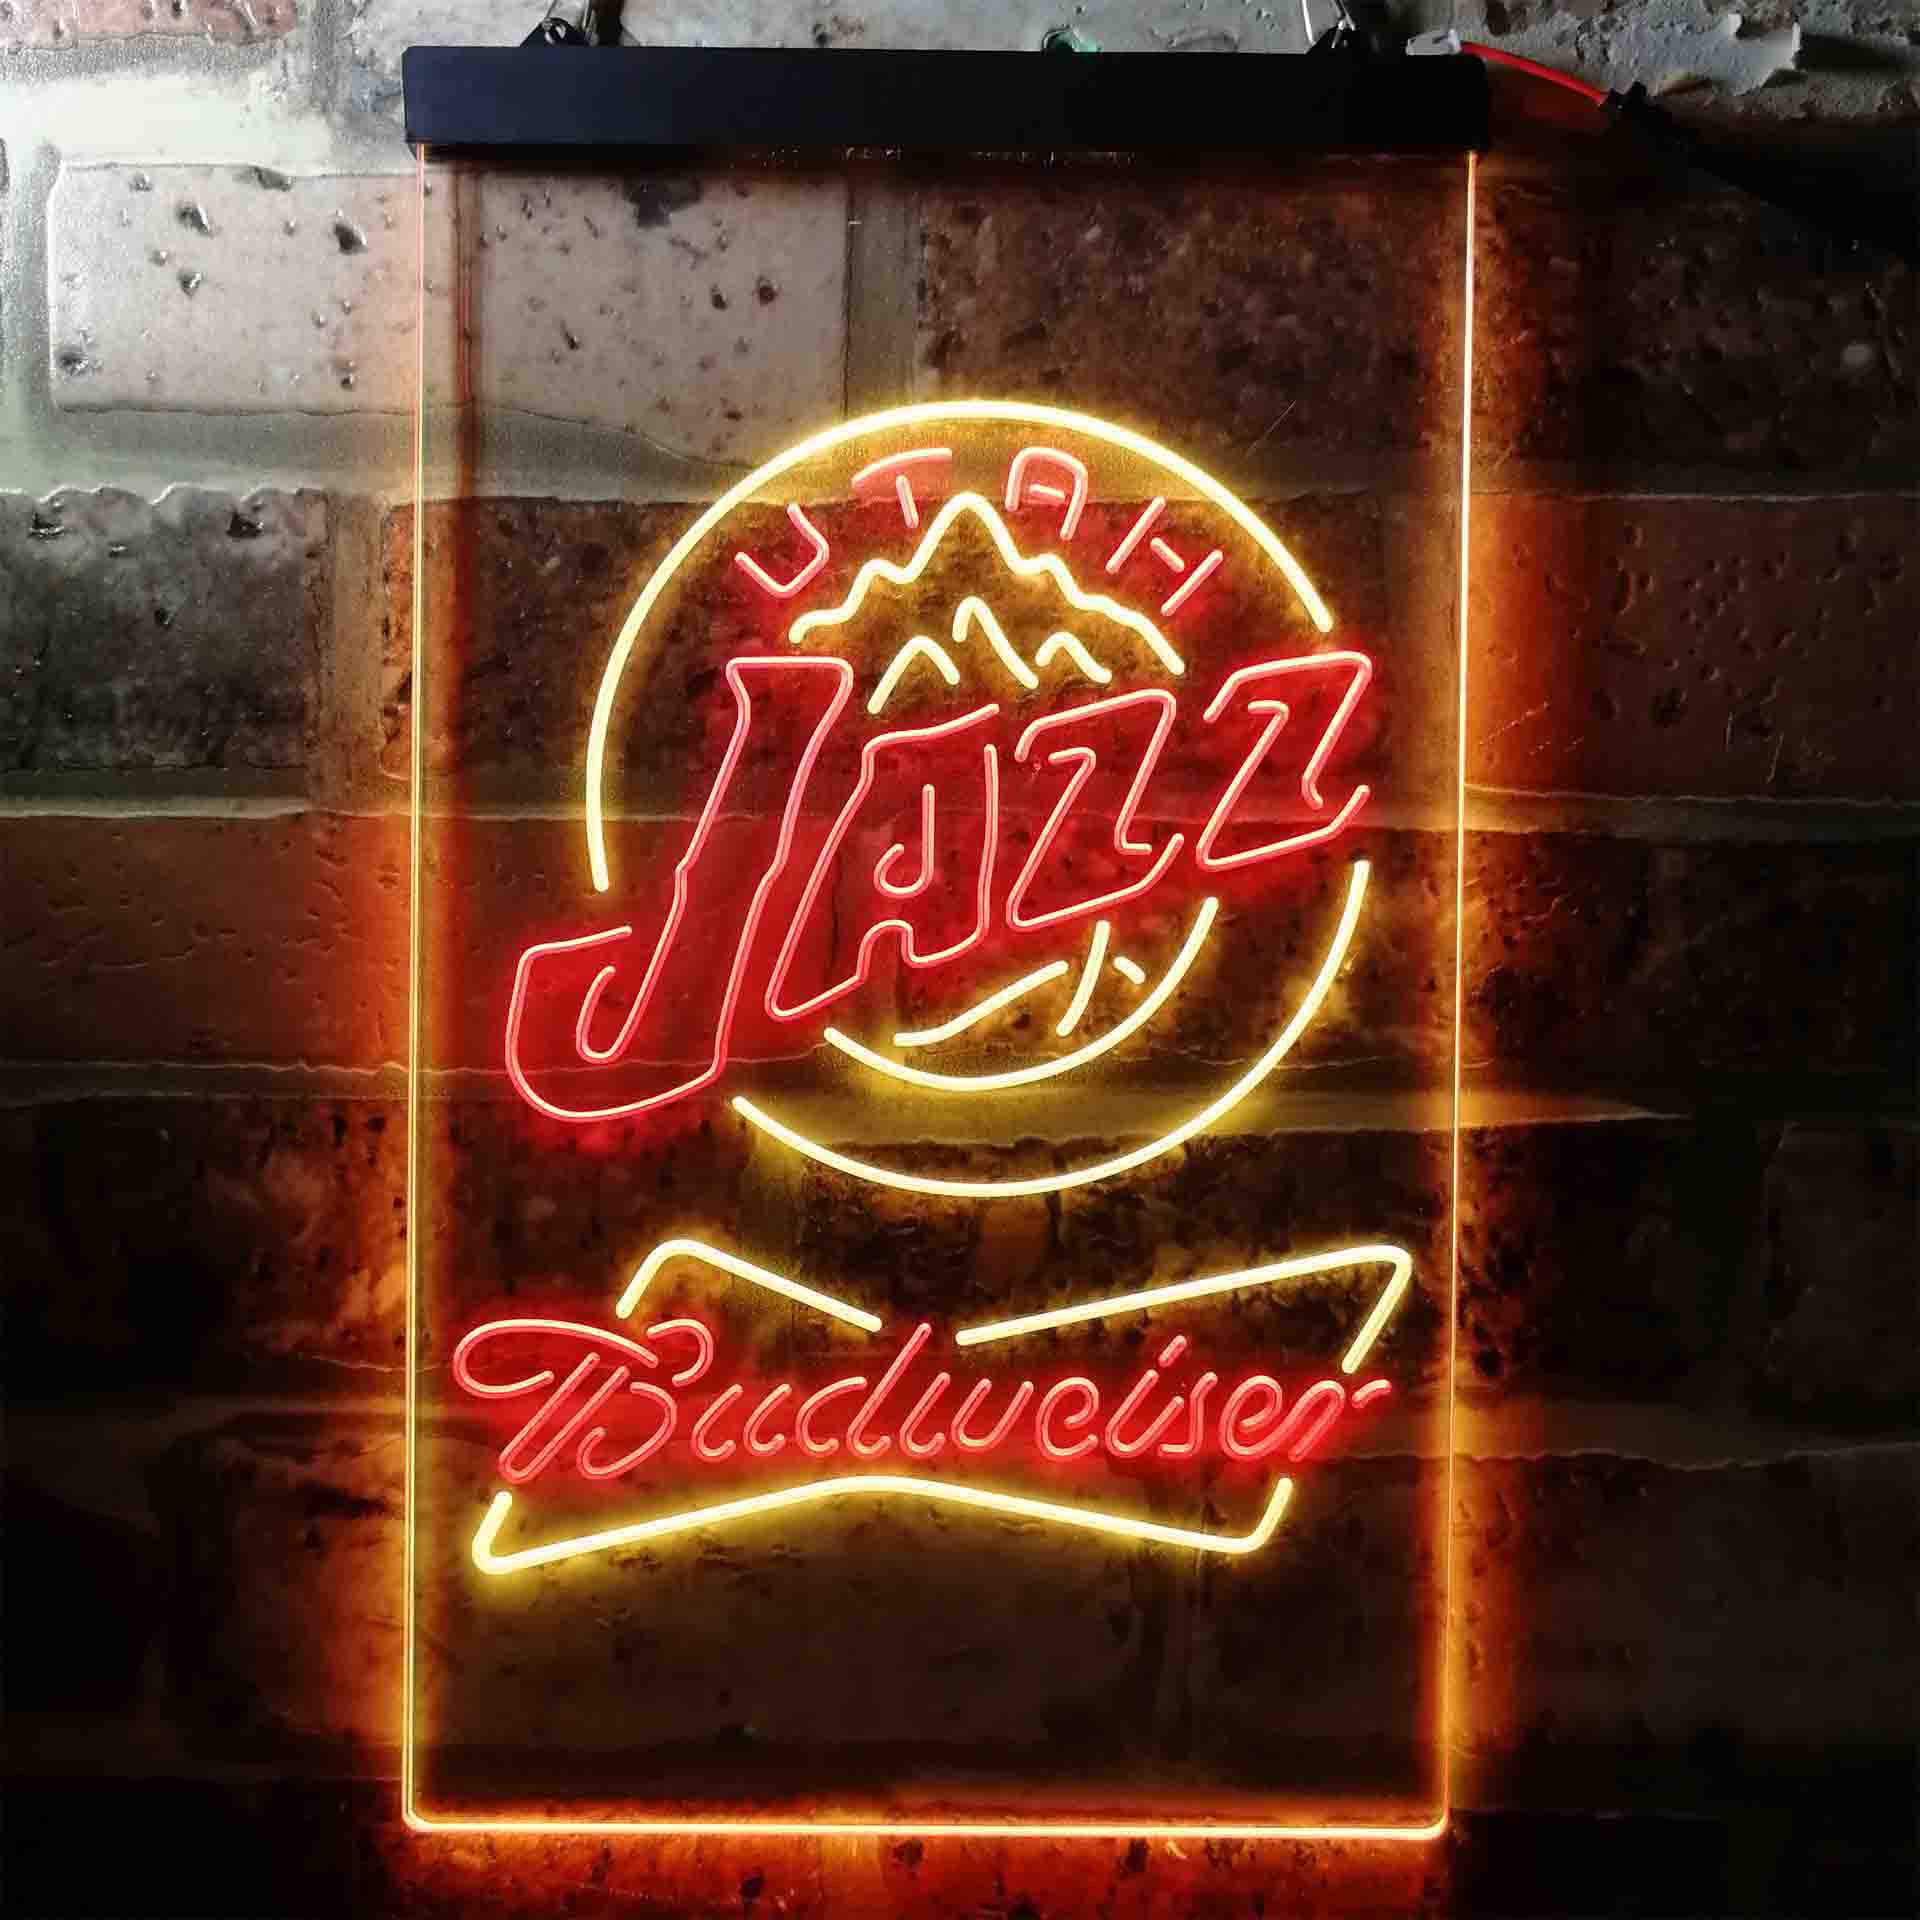 utah jazz budweiser beer LED Neon Sign